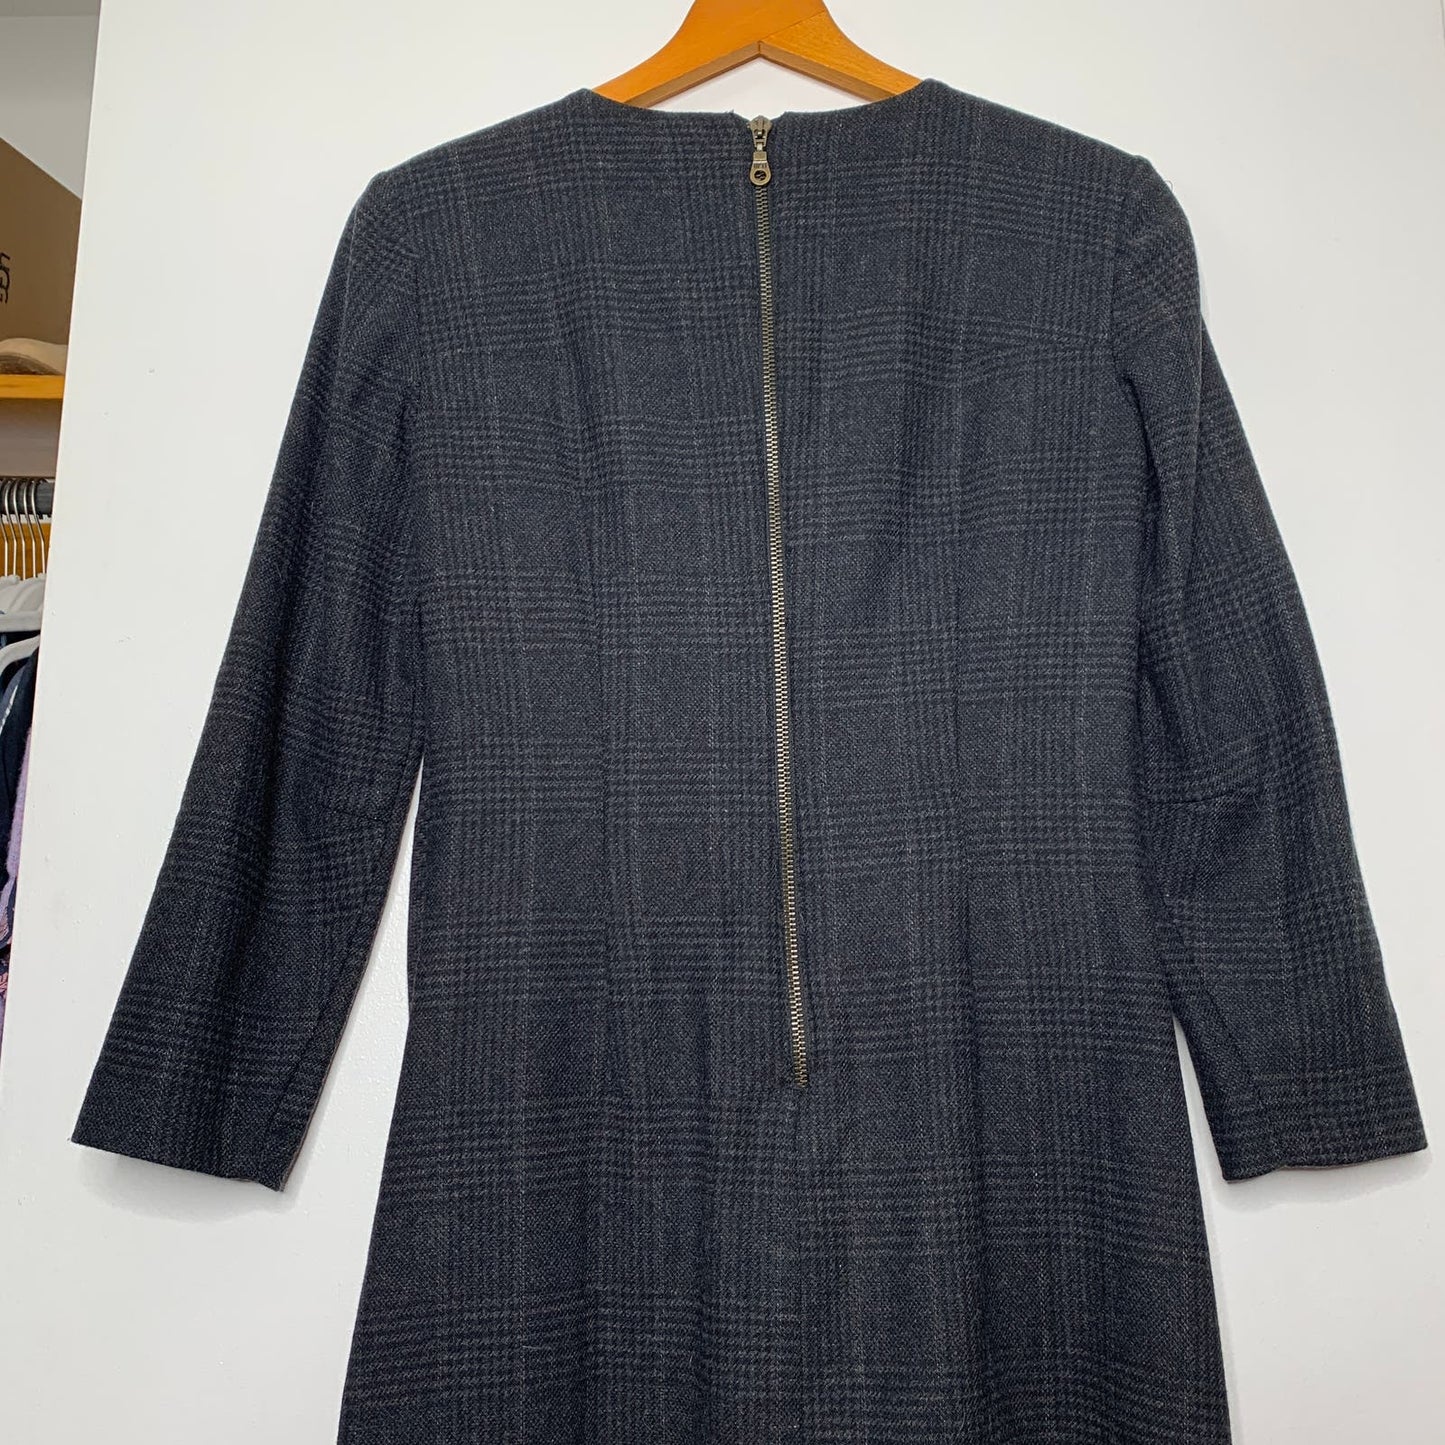 Dark gray sawtooth plaid wool sheath dress SZ 6